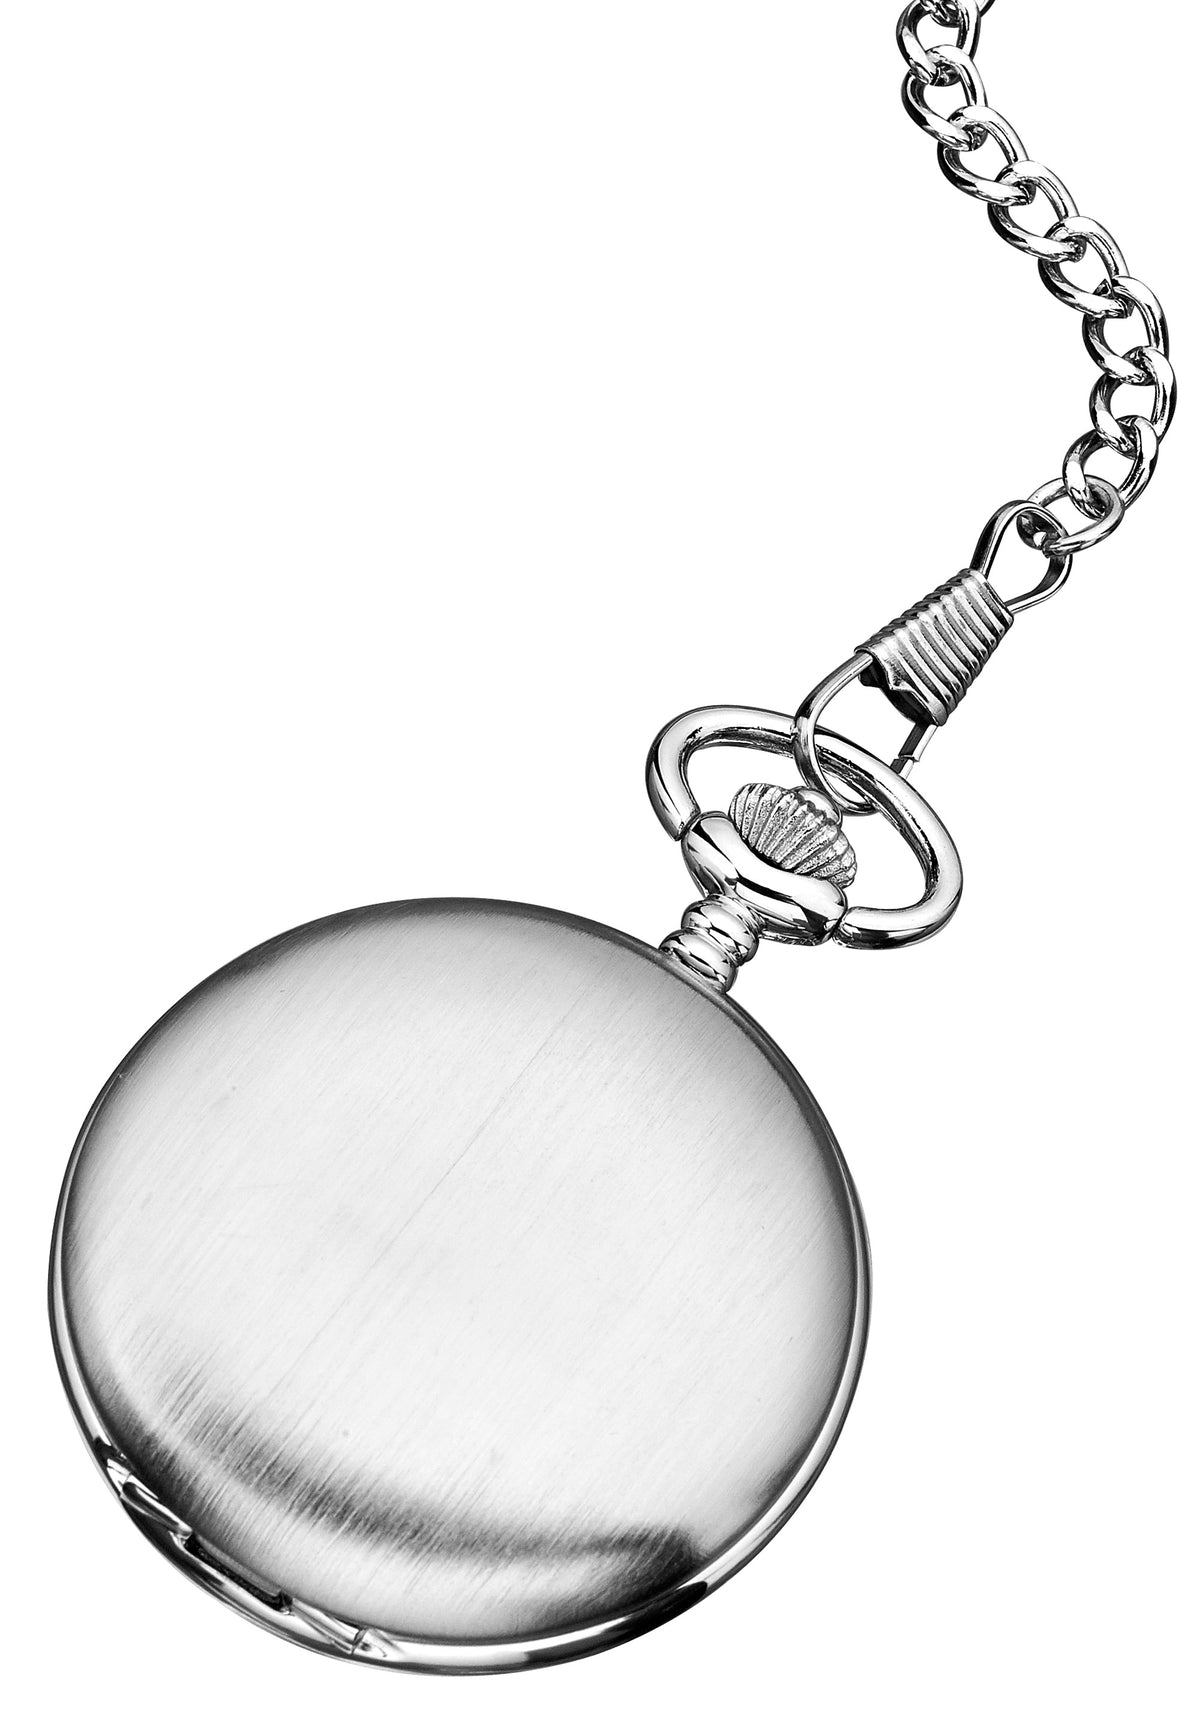 Alpine Quartz Pocket Watch - Silver